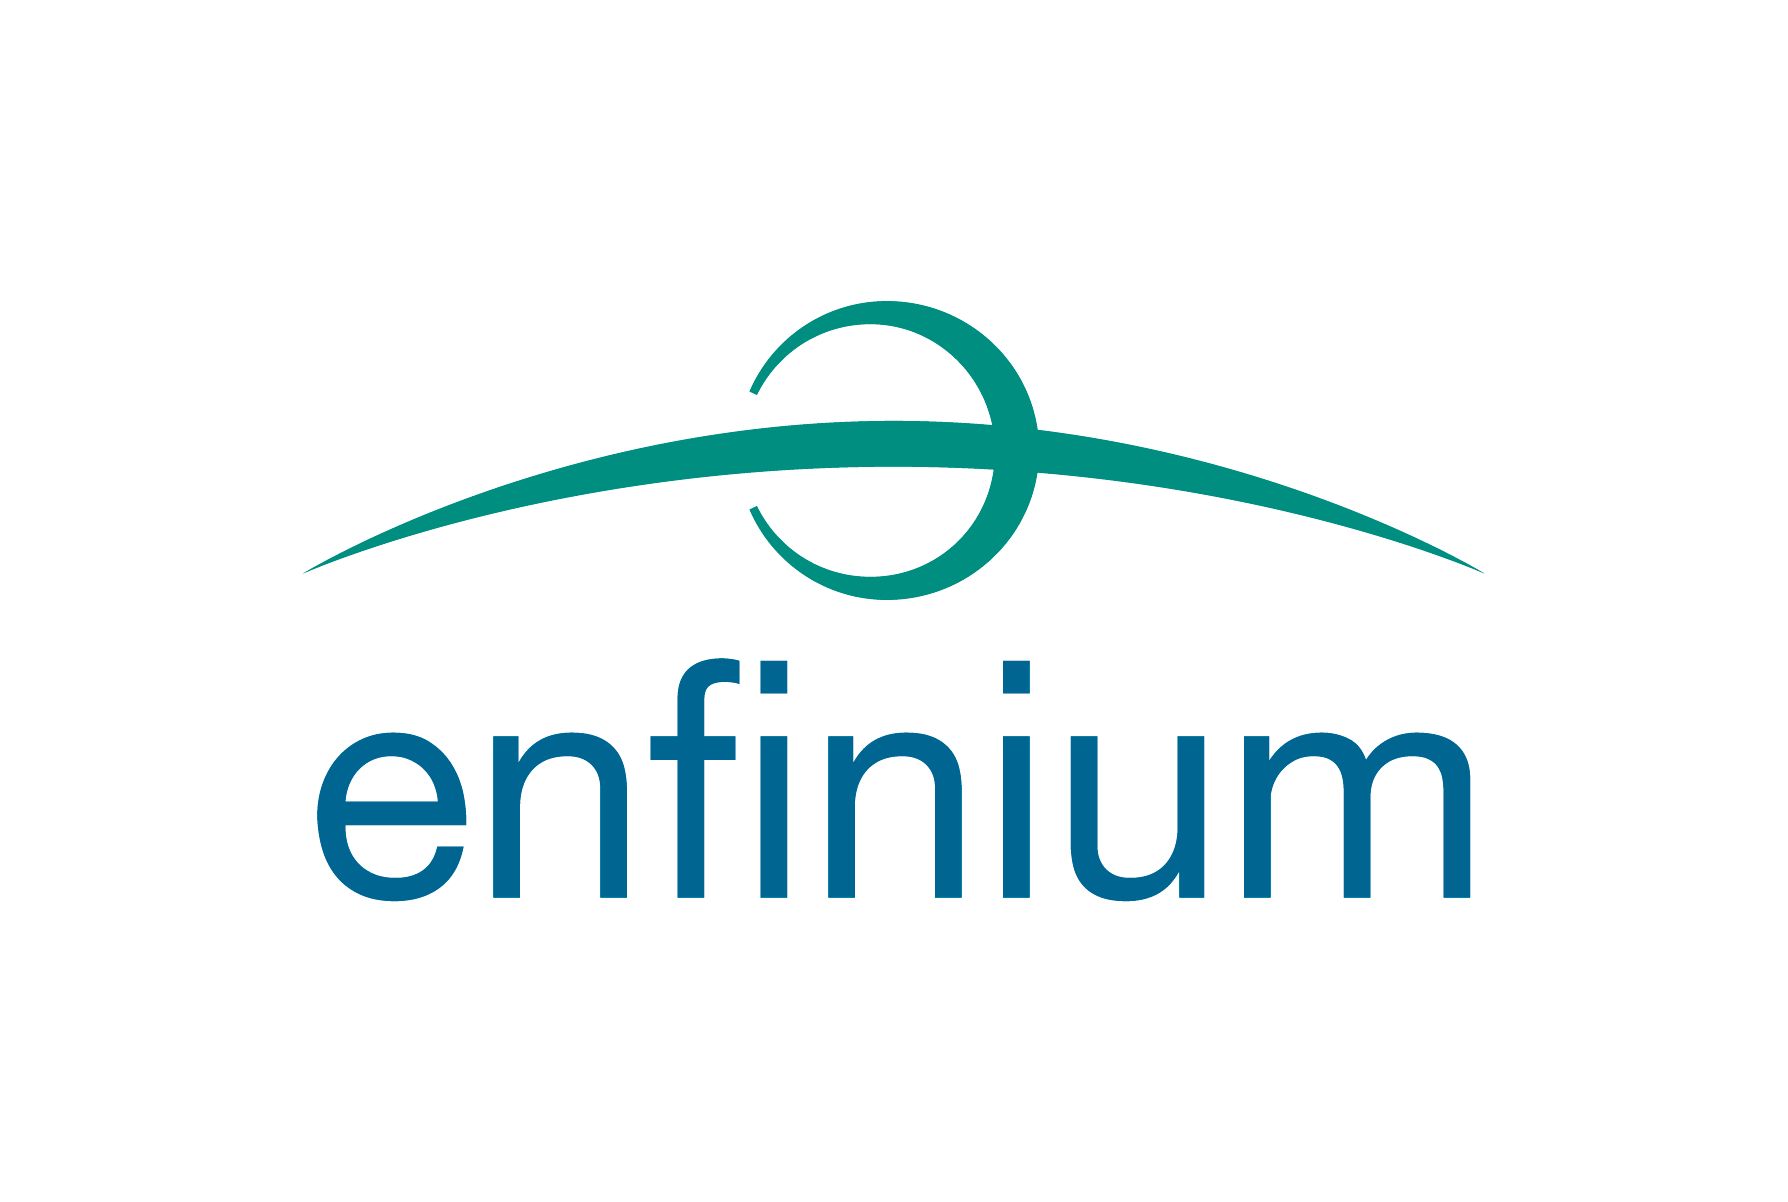 Enfinium logo